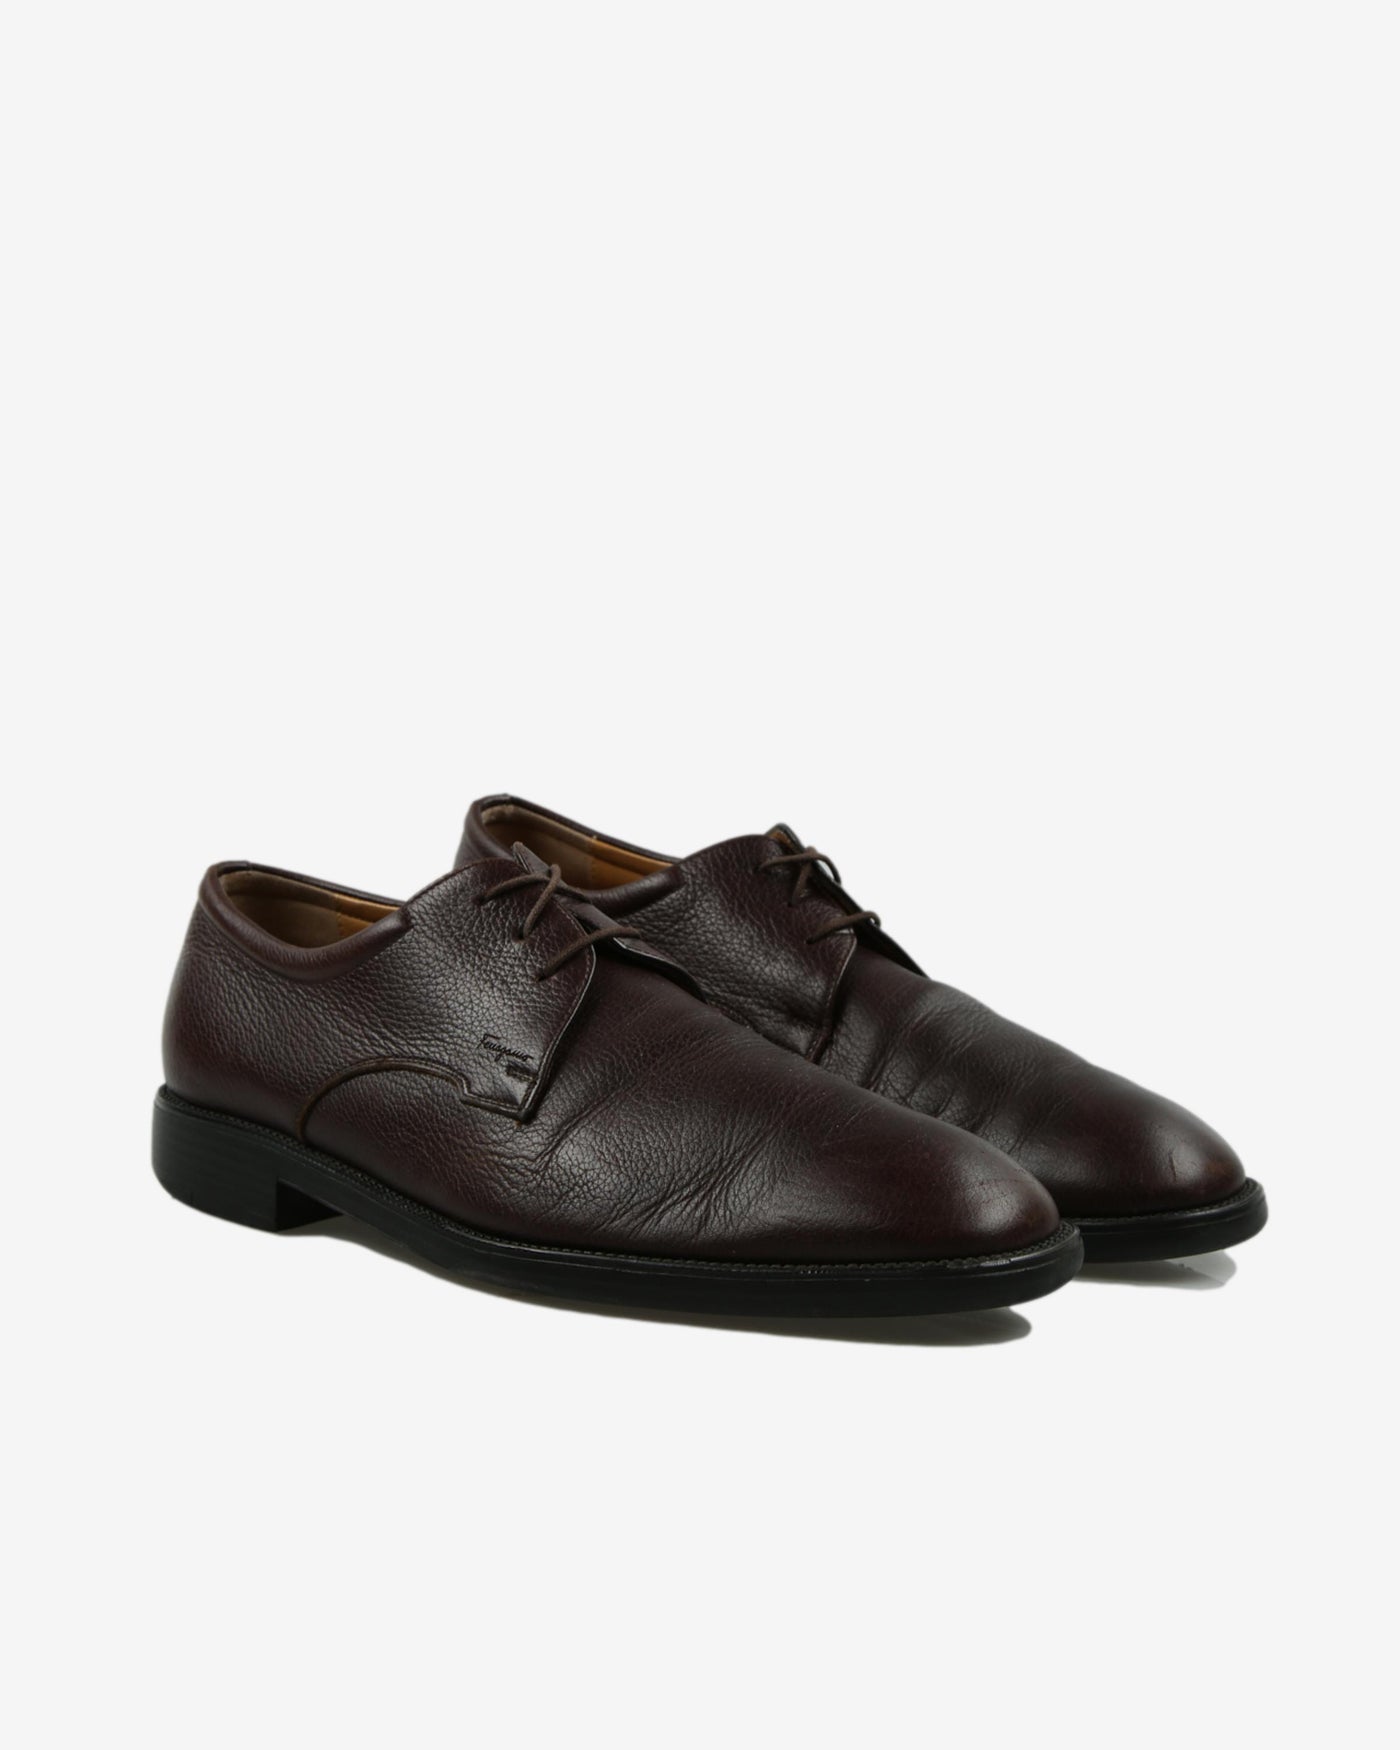 Salvatore Ferragamo Brown Leather Suit Shoes - UK 9